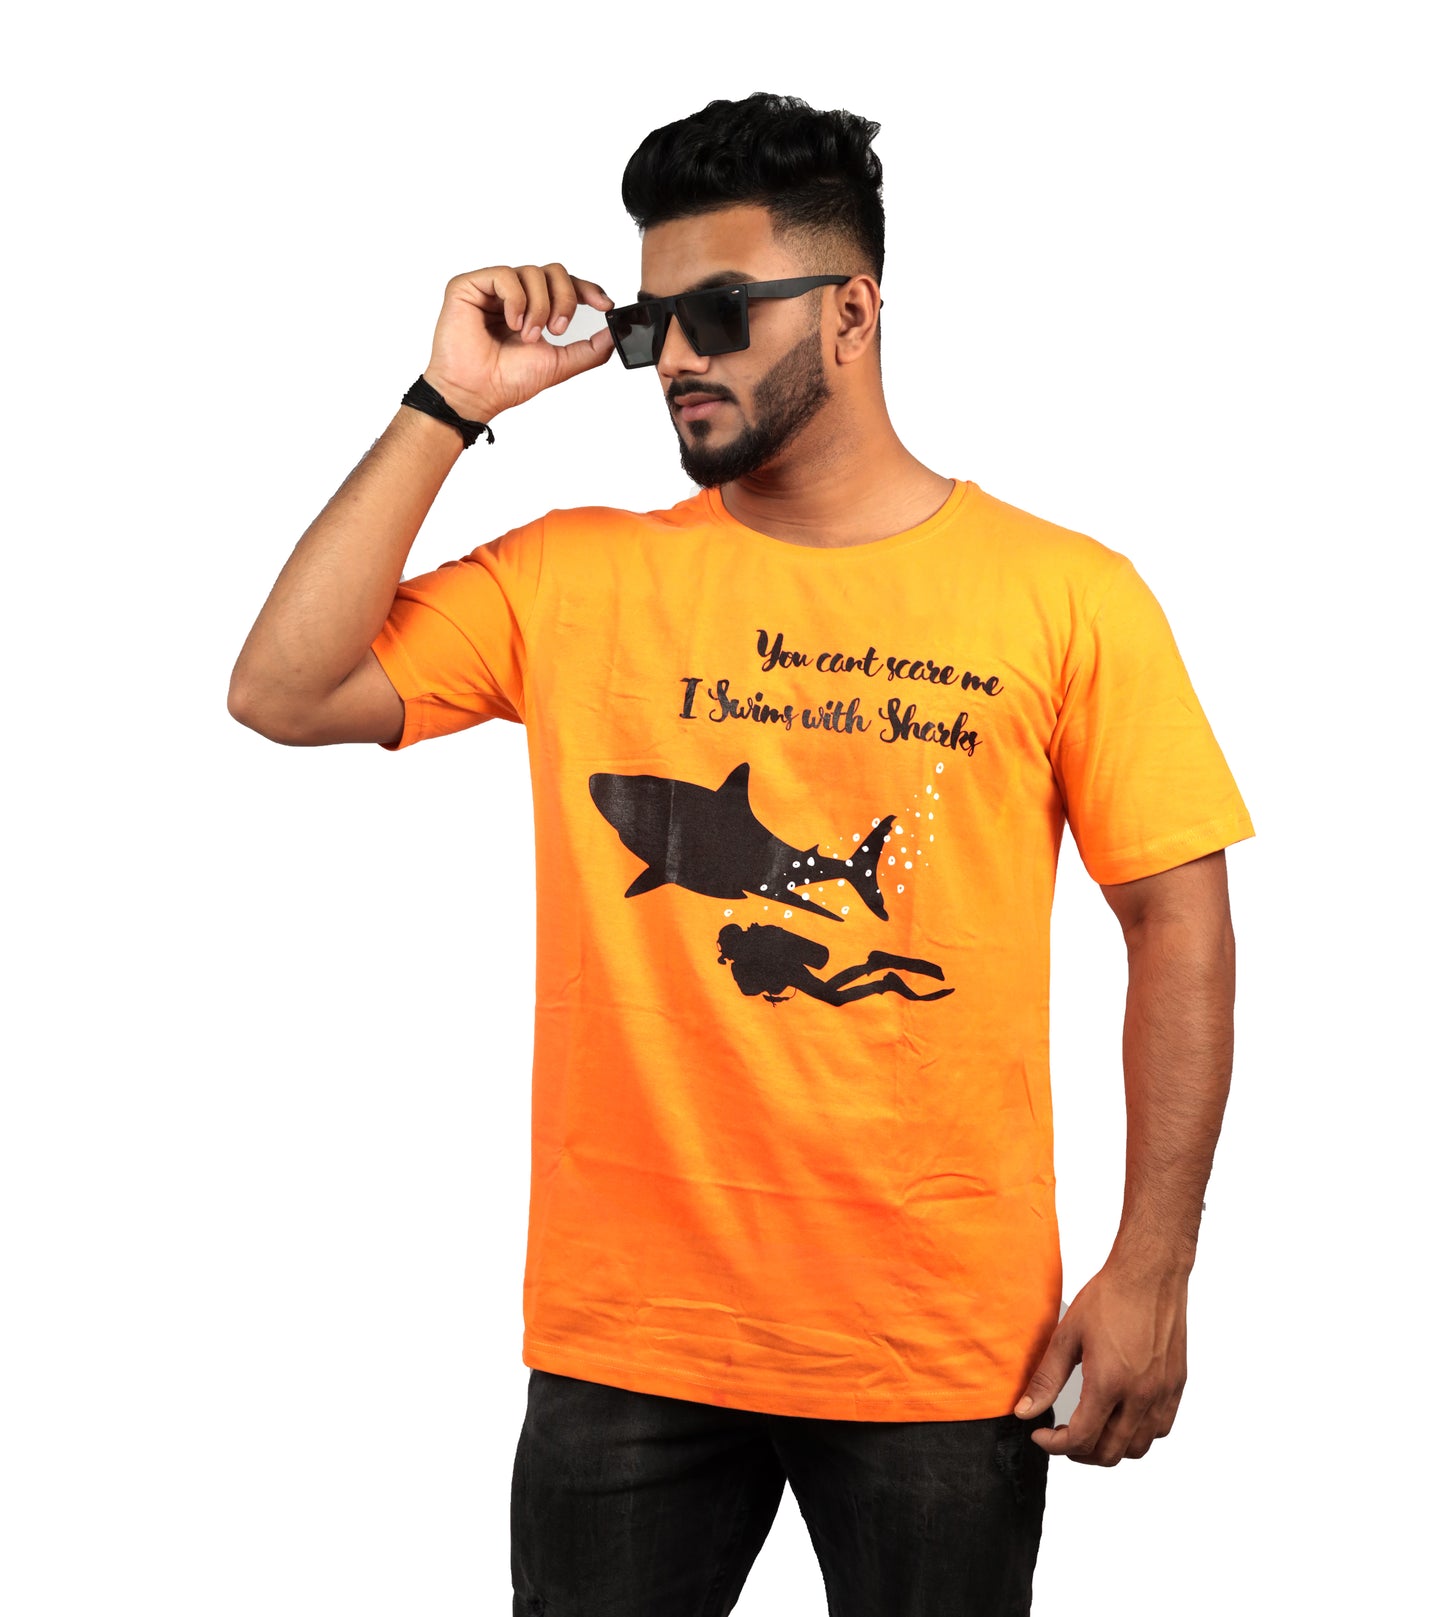 Shark Diver Quote T-Shirt In Orange Color For Men